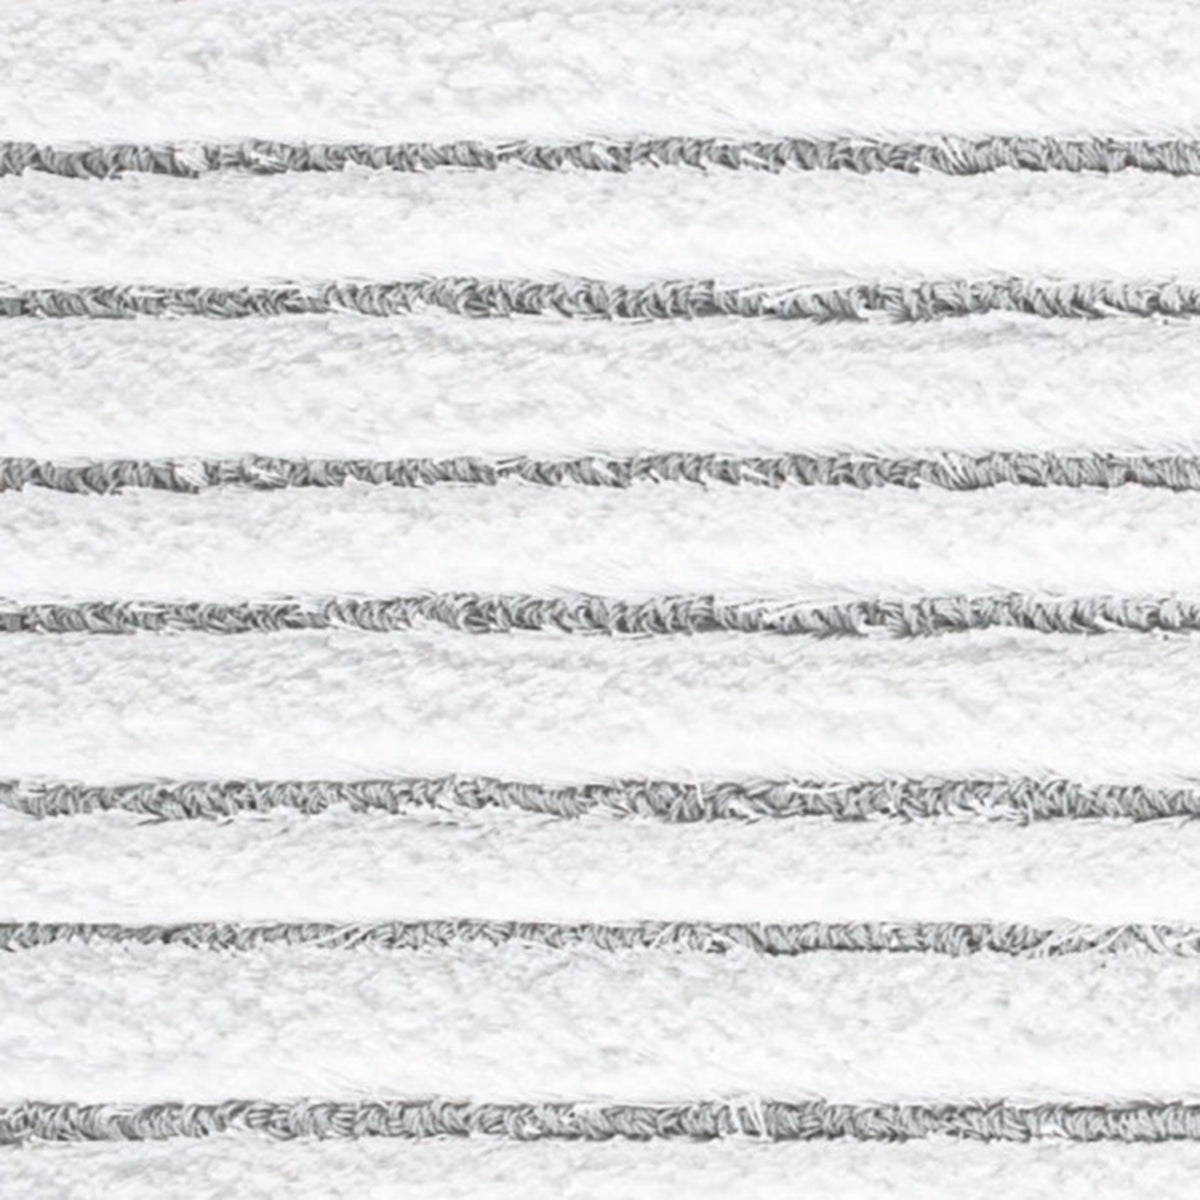 Swatch Sample of Graccioza Taormina Bath Rugs in Silver Color